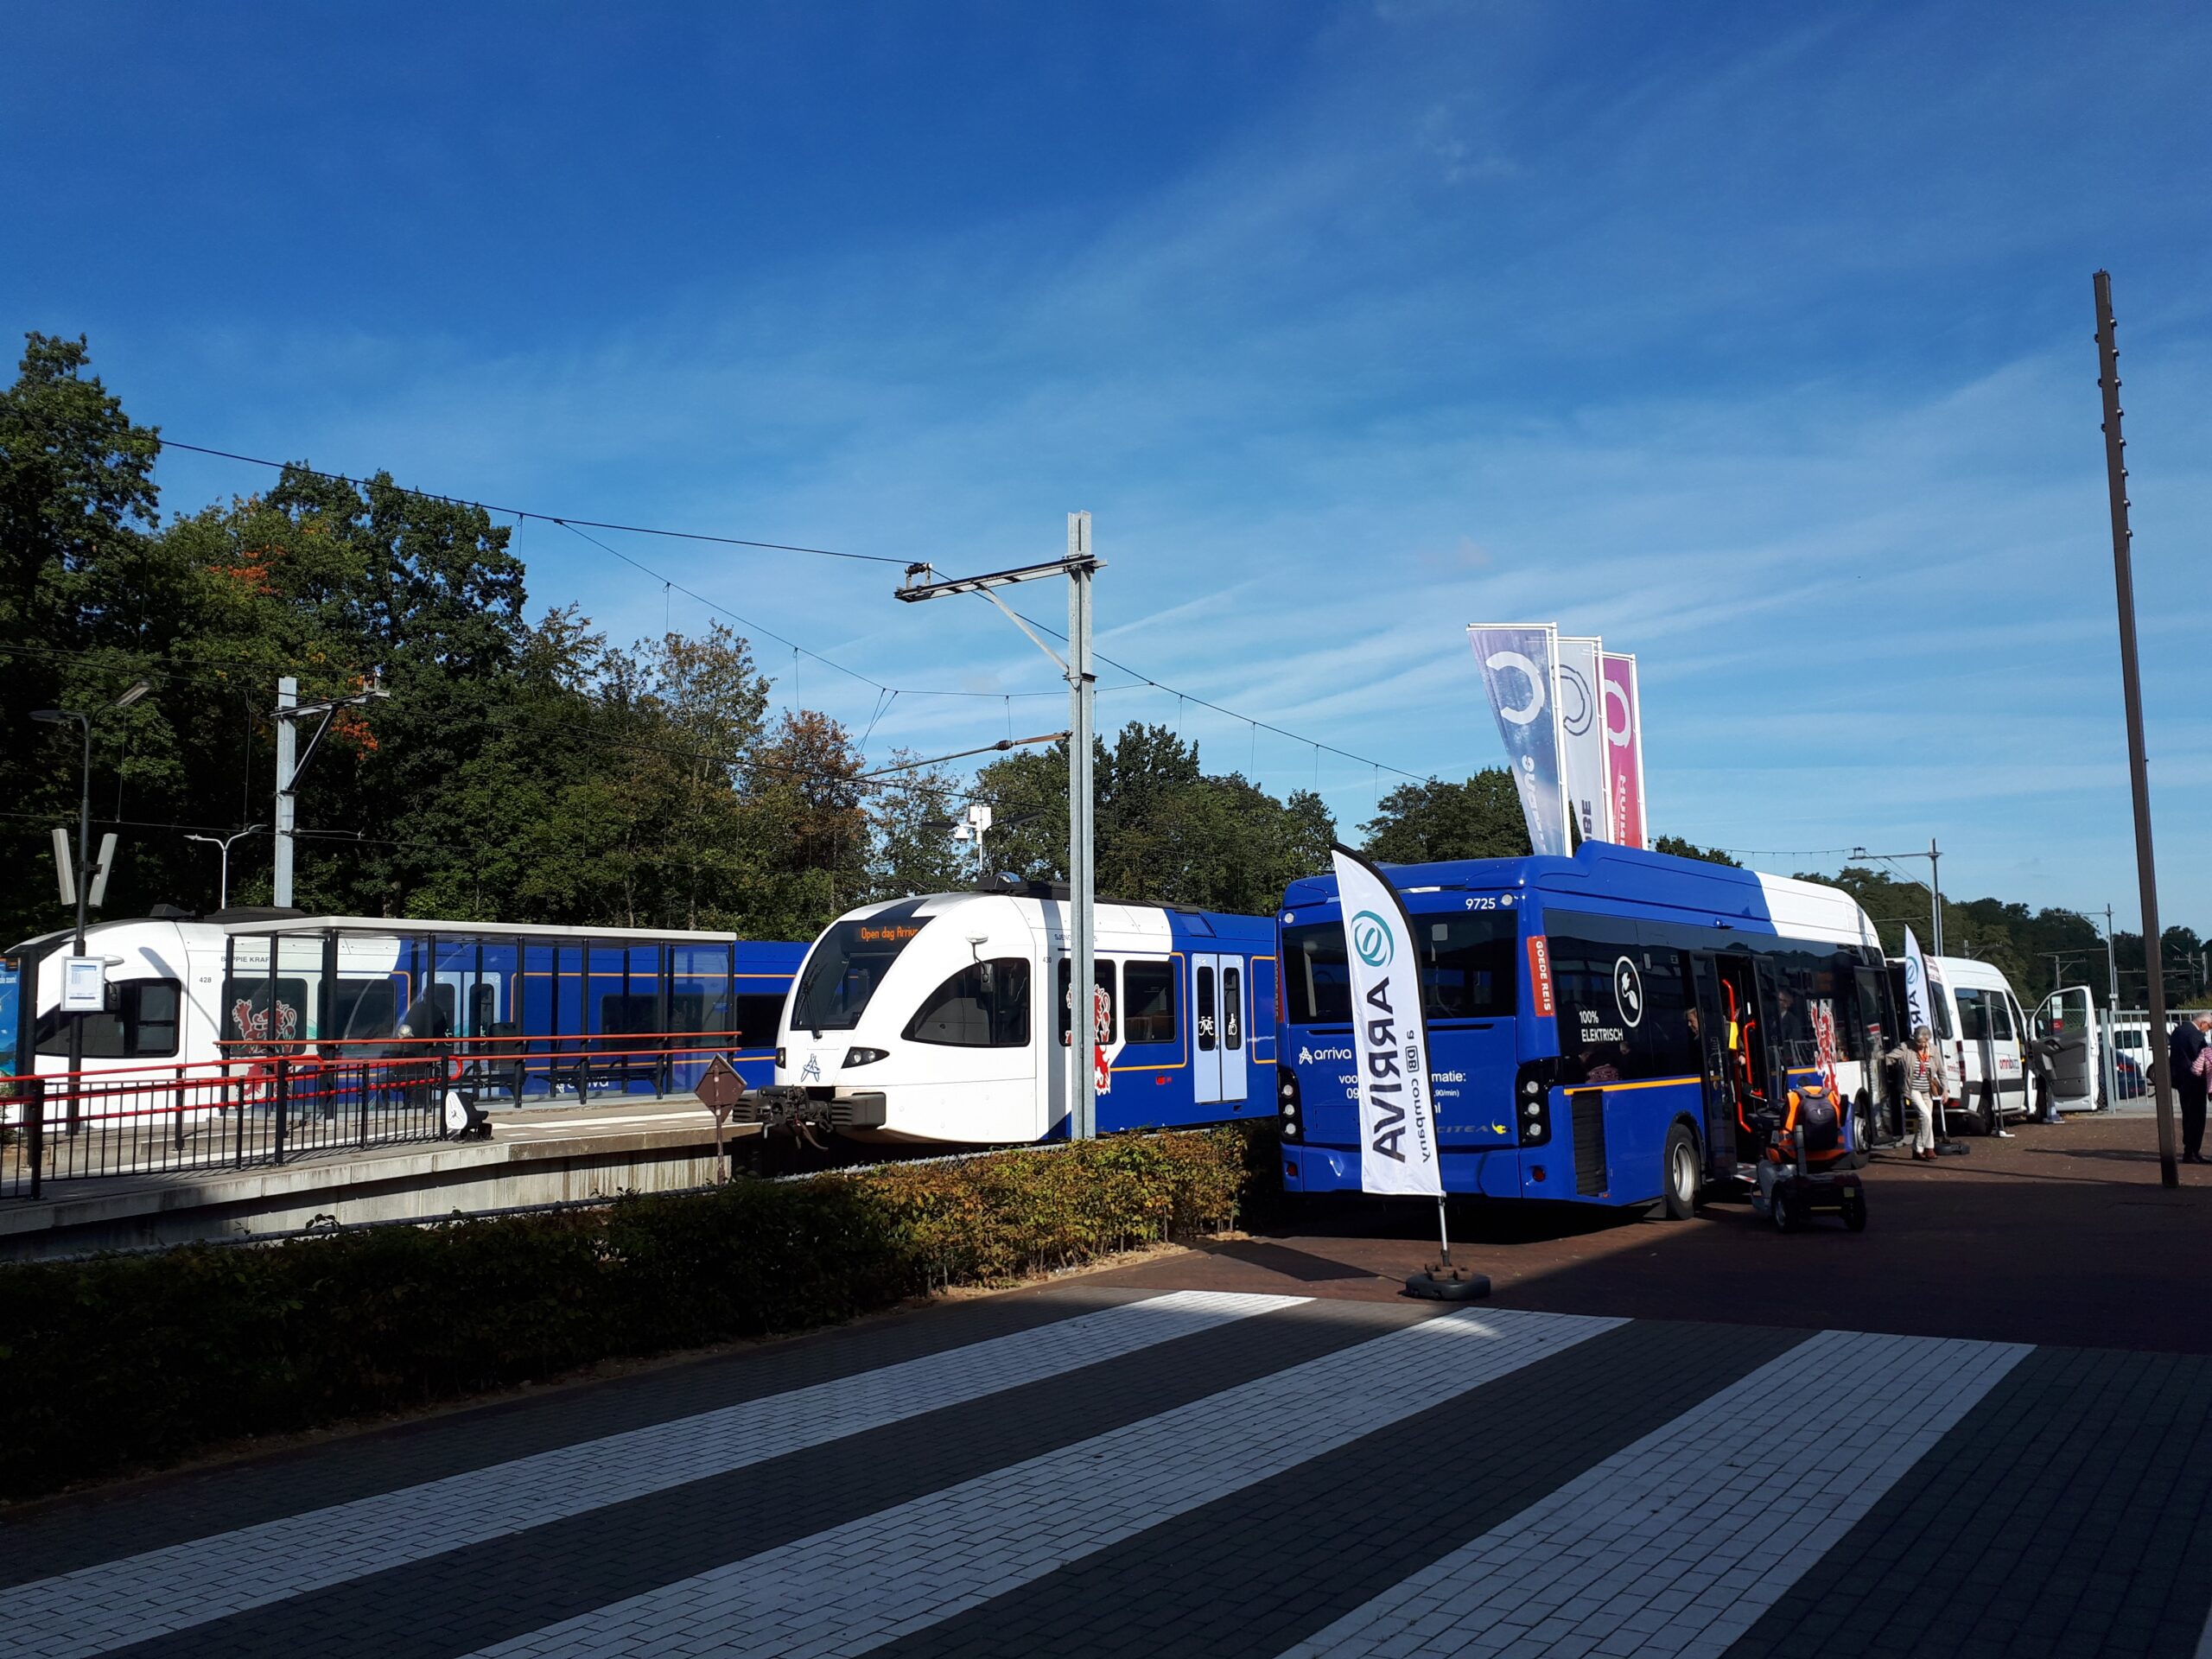 Blauwwitte treinen van Arriva staan stil op station Kerkrade.